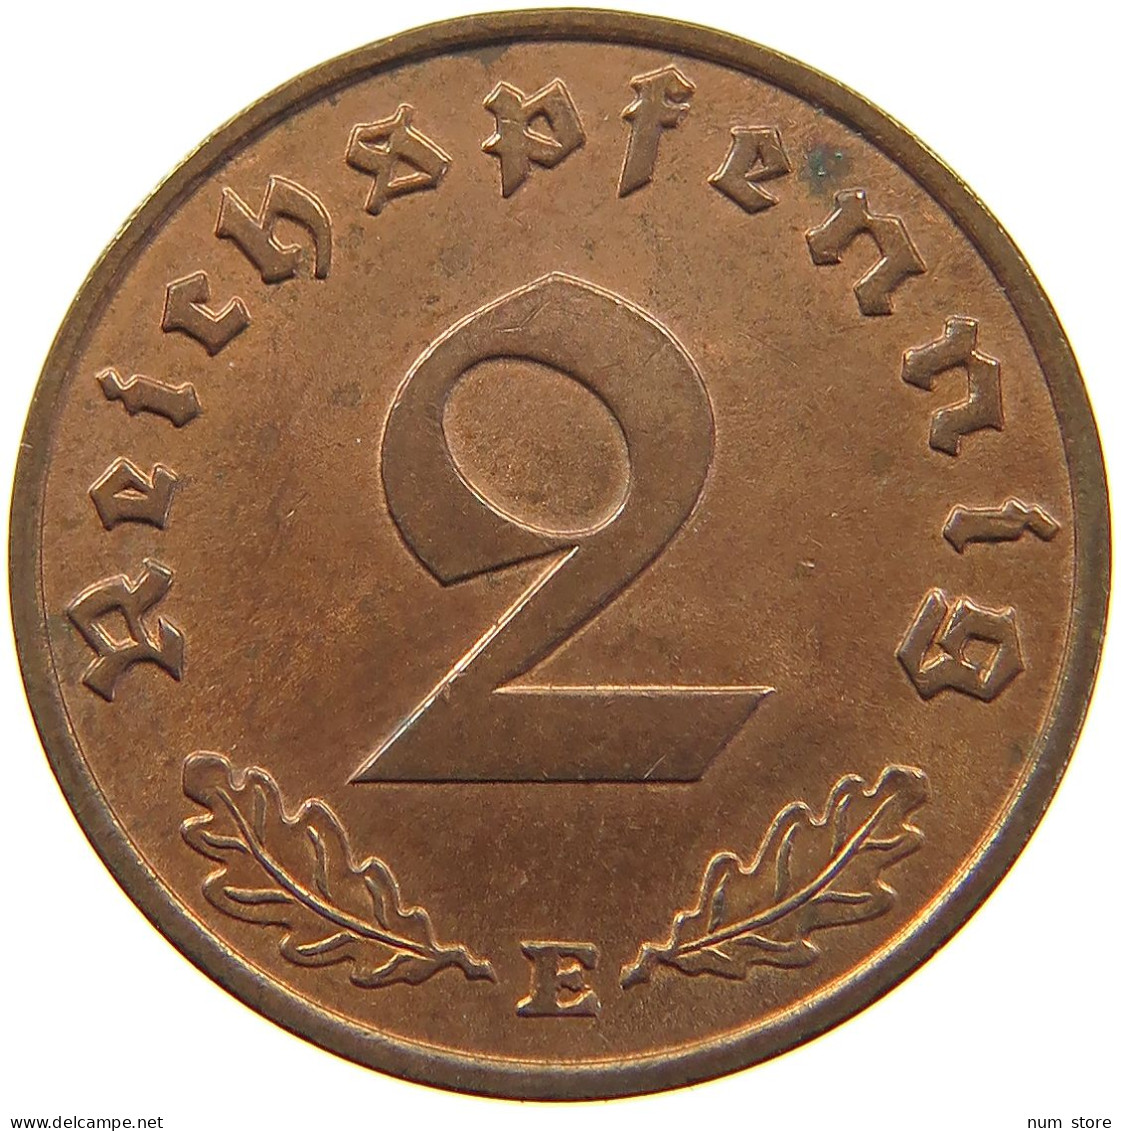 GERMANY 2 PFENNIG 1939 E #a032 0369 - 2 Reichspfennig